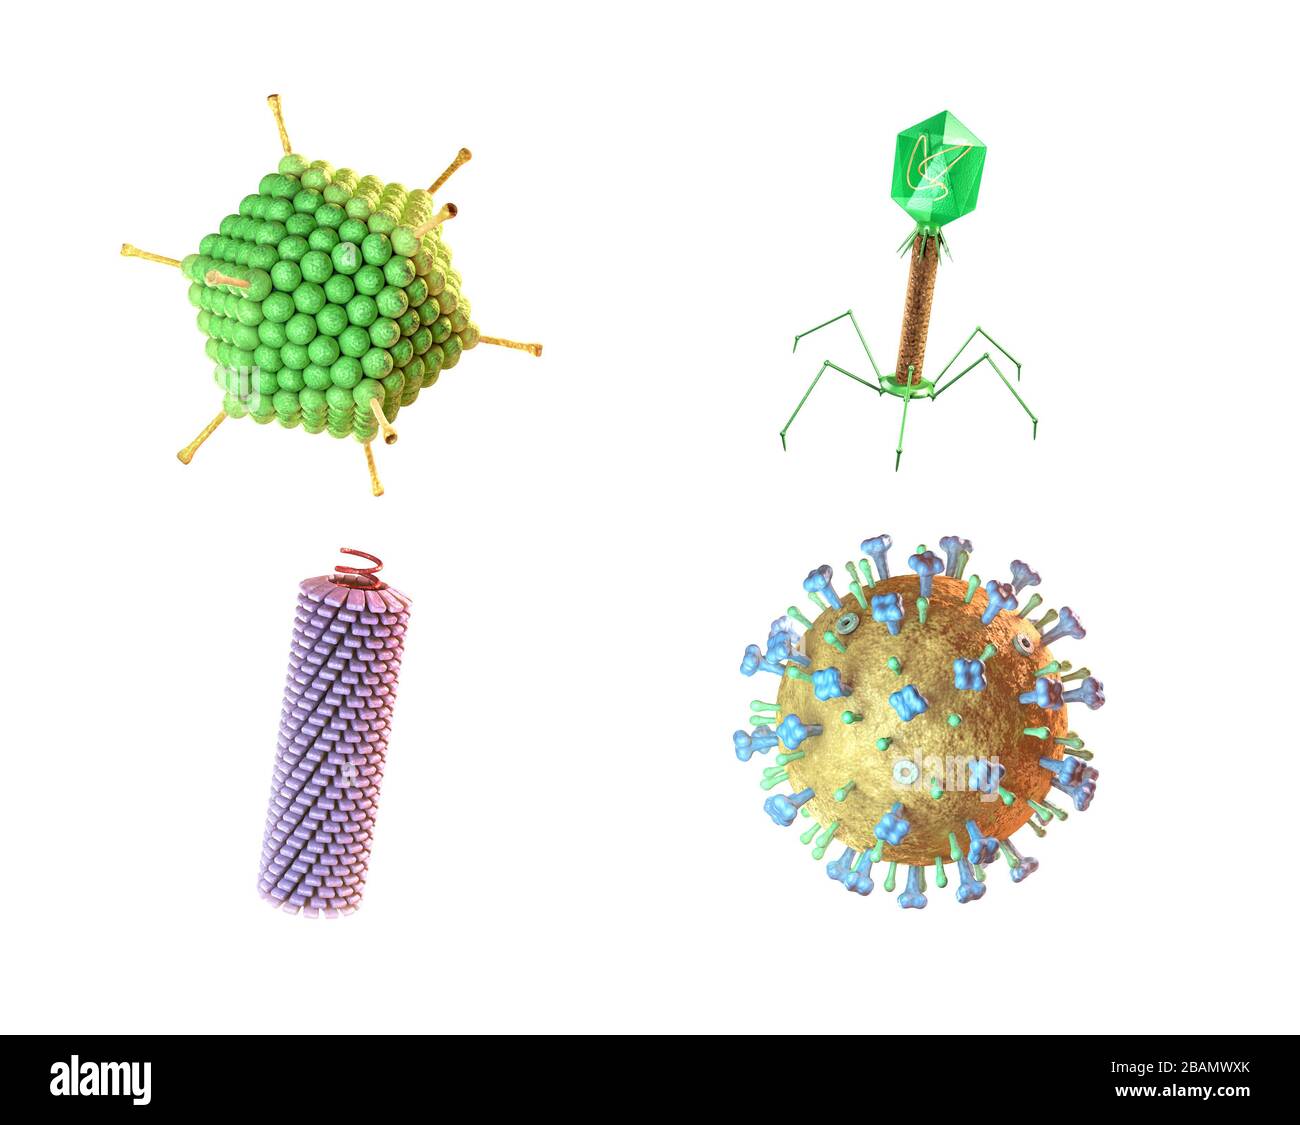 Virus classification bas on shape. Digital illustration. Stock Photo